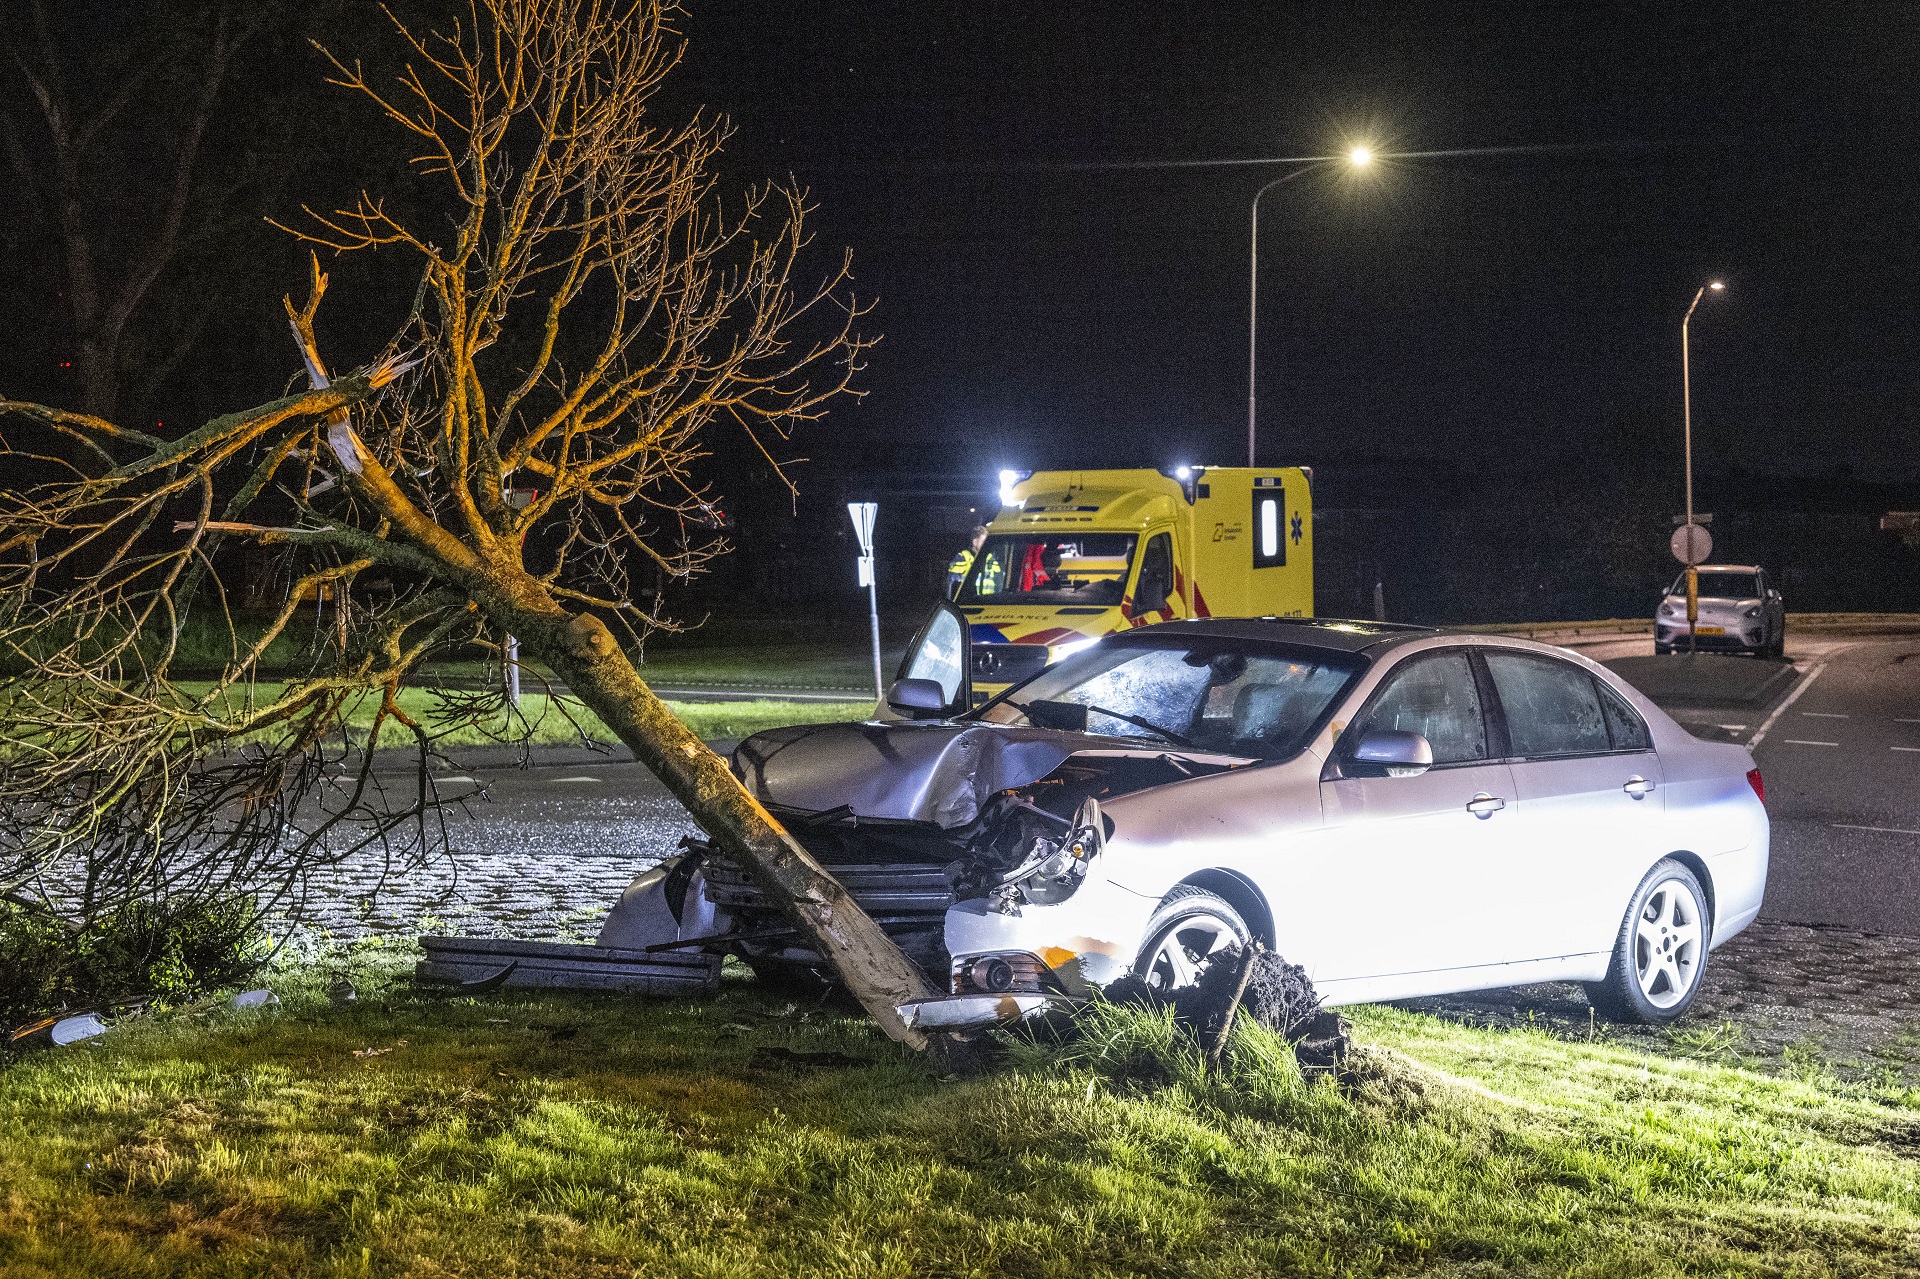 Dronken automobilist botst tegen boom op rotonde, bijrijder gewond